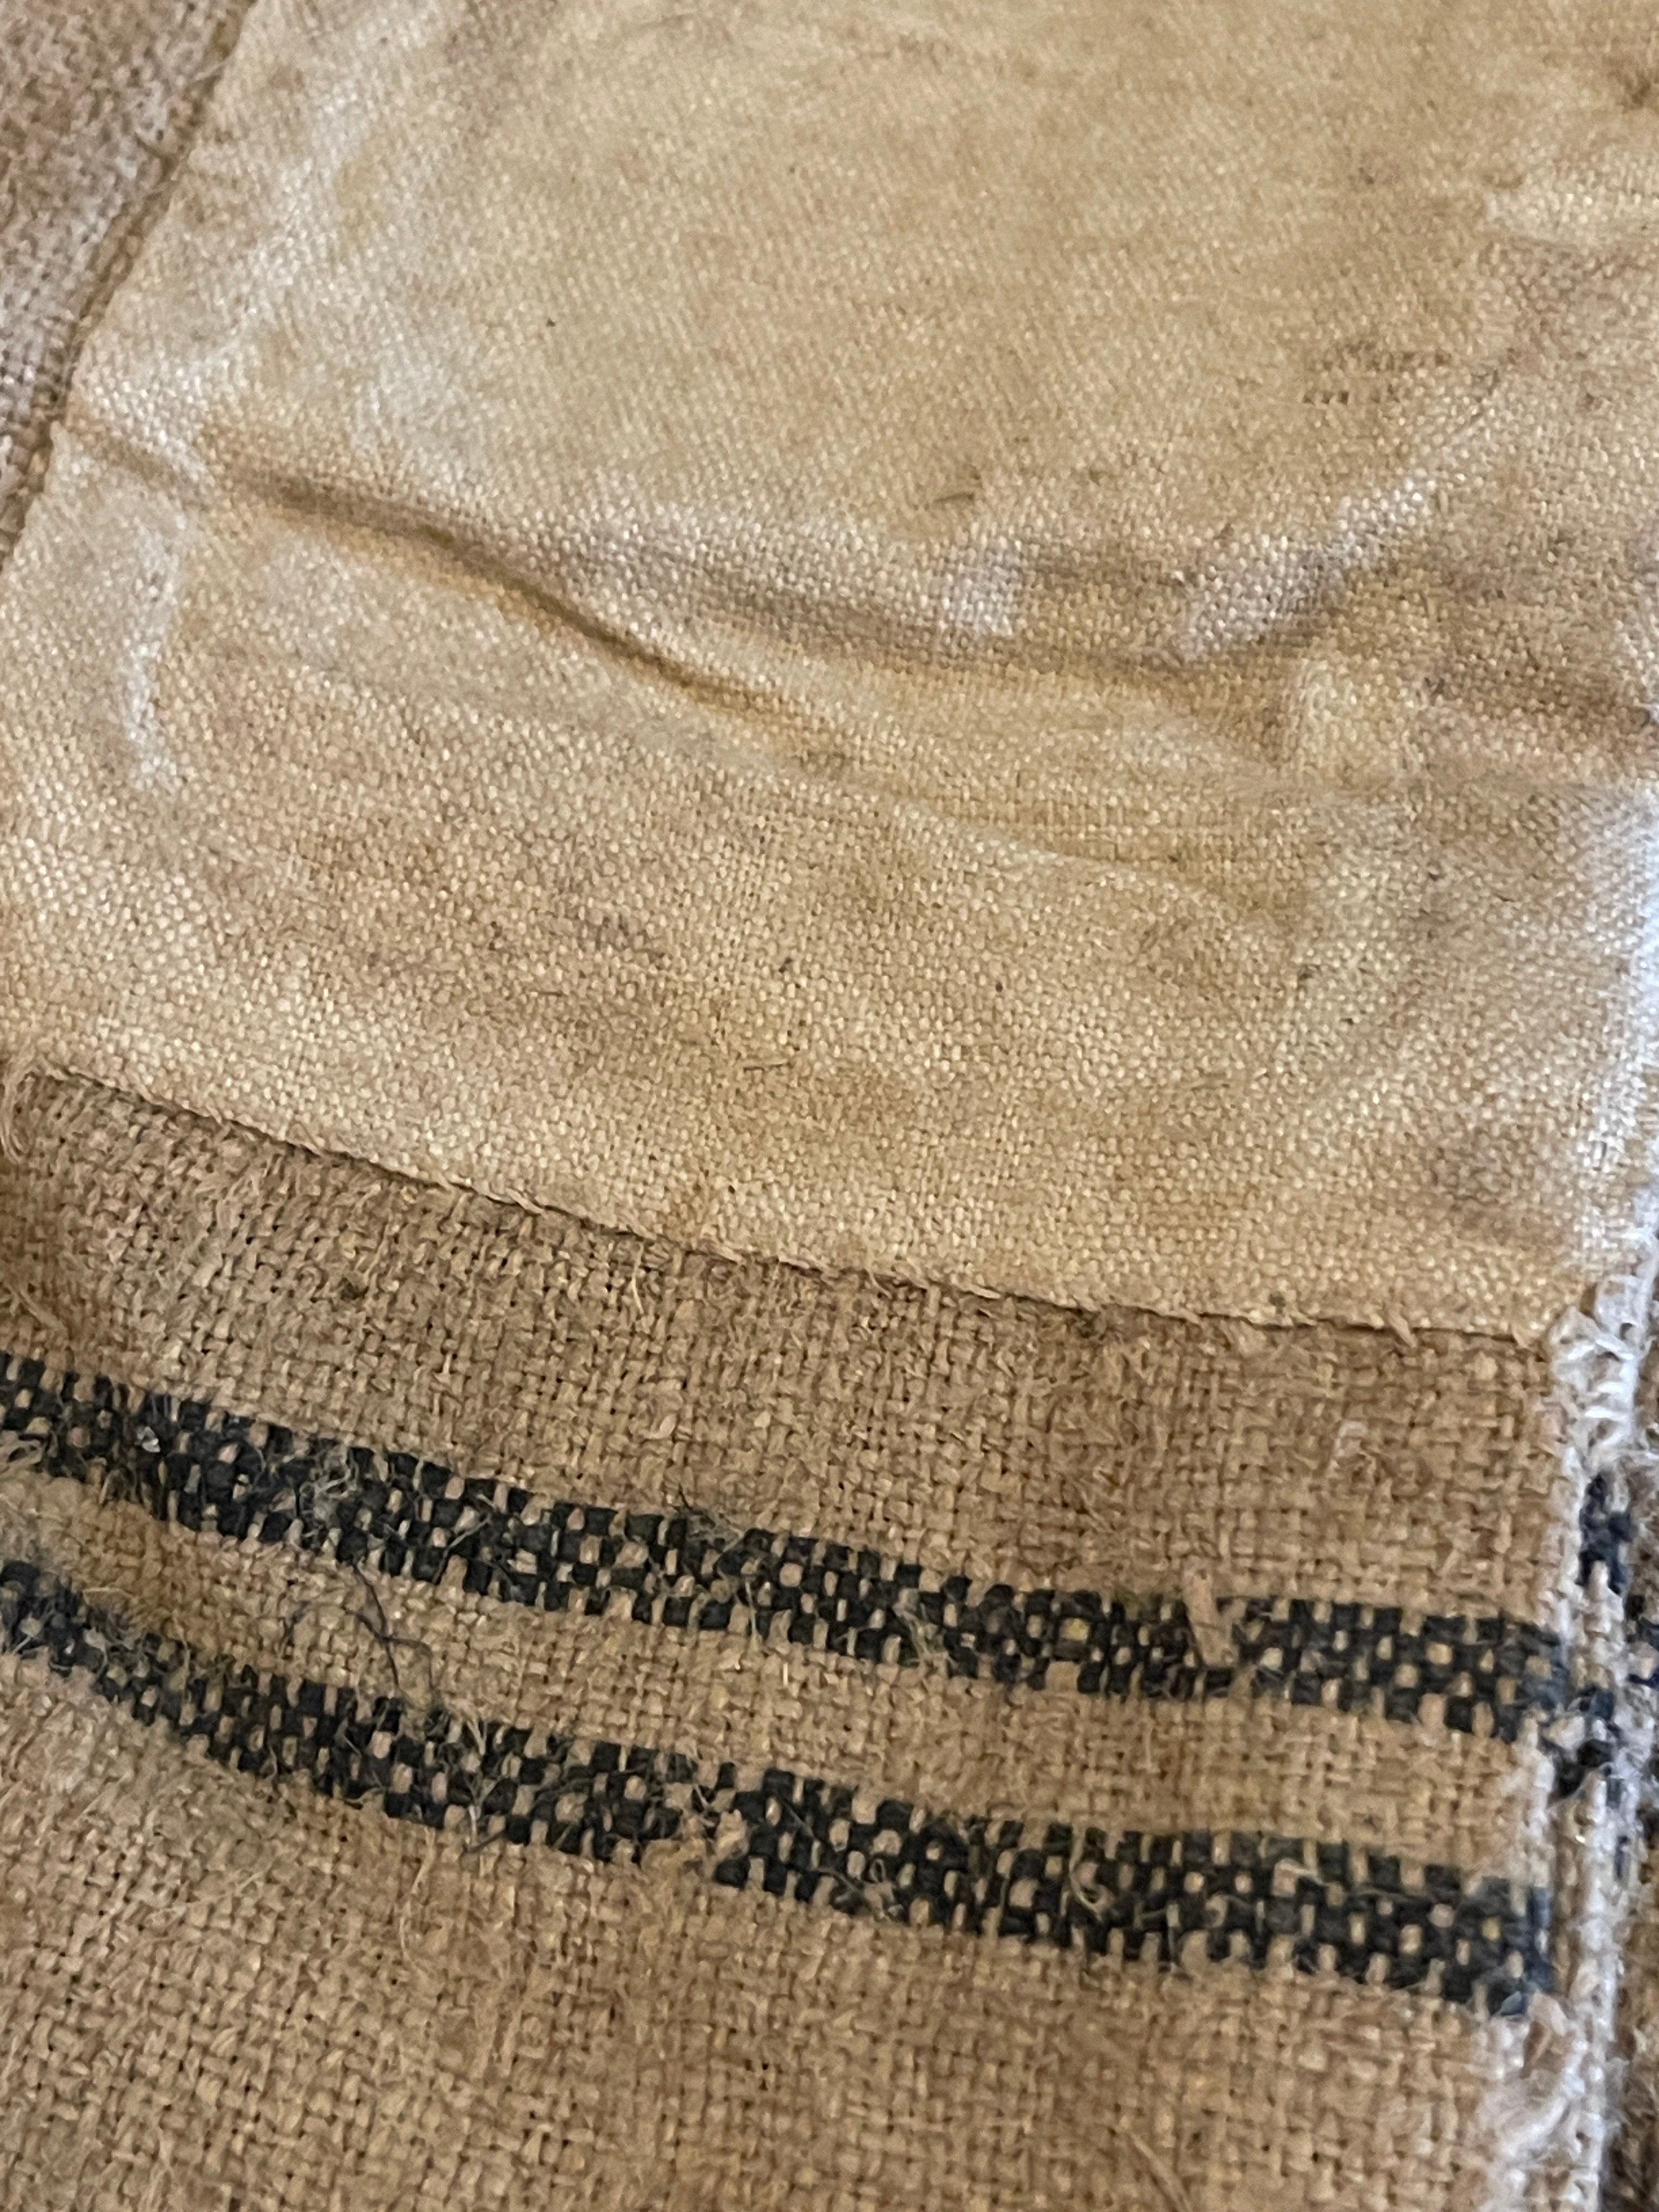 Antique 19th Century French Linen and Hemp Sacks